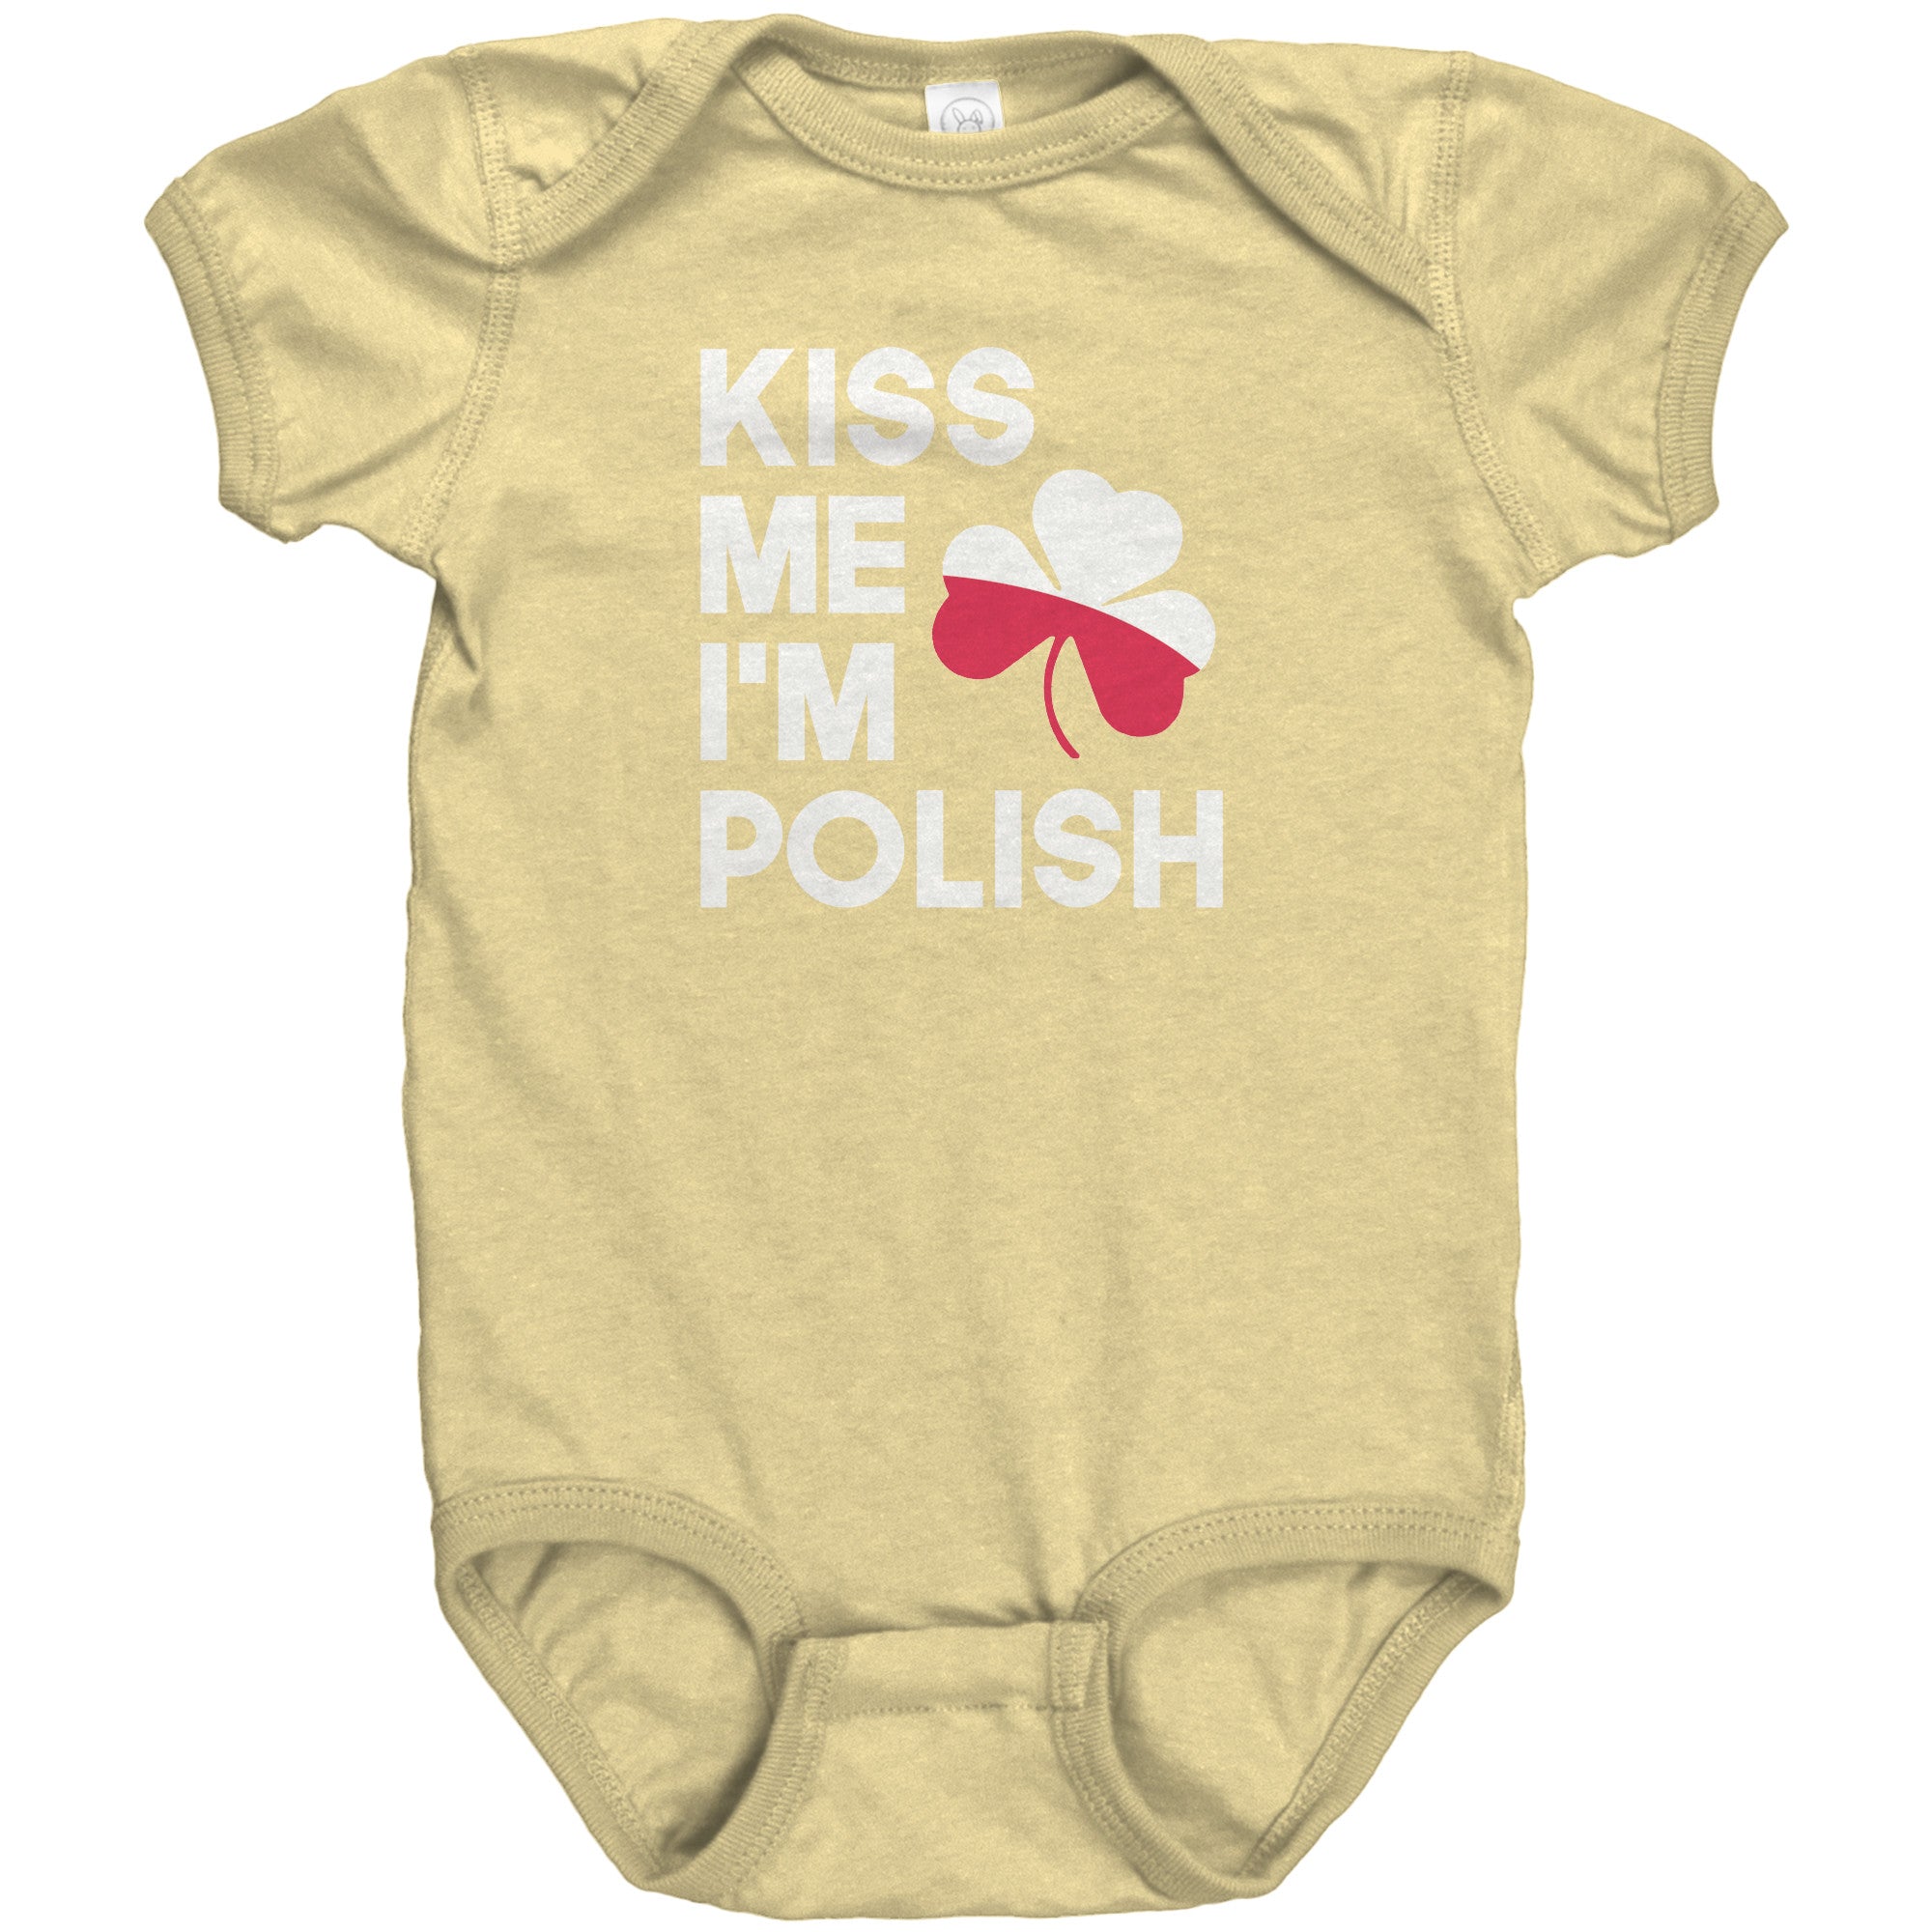 Kiss me I'm polish baby bodysuit-multiple colors – My Polish Heritage